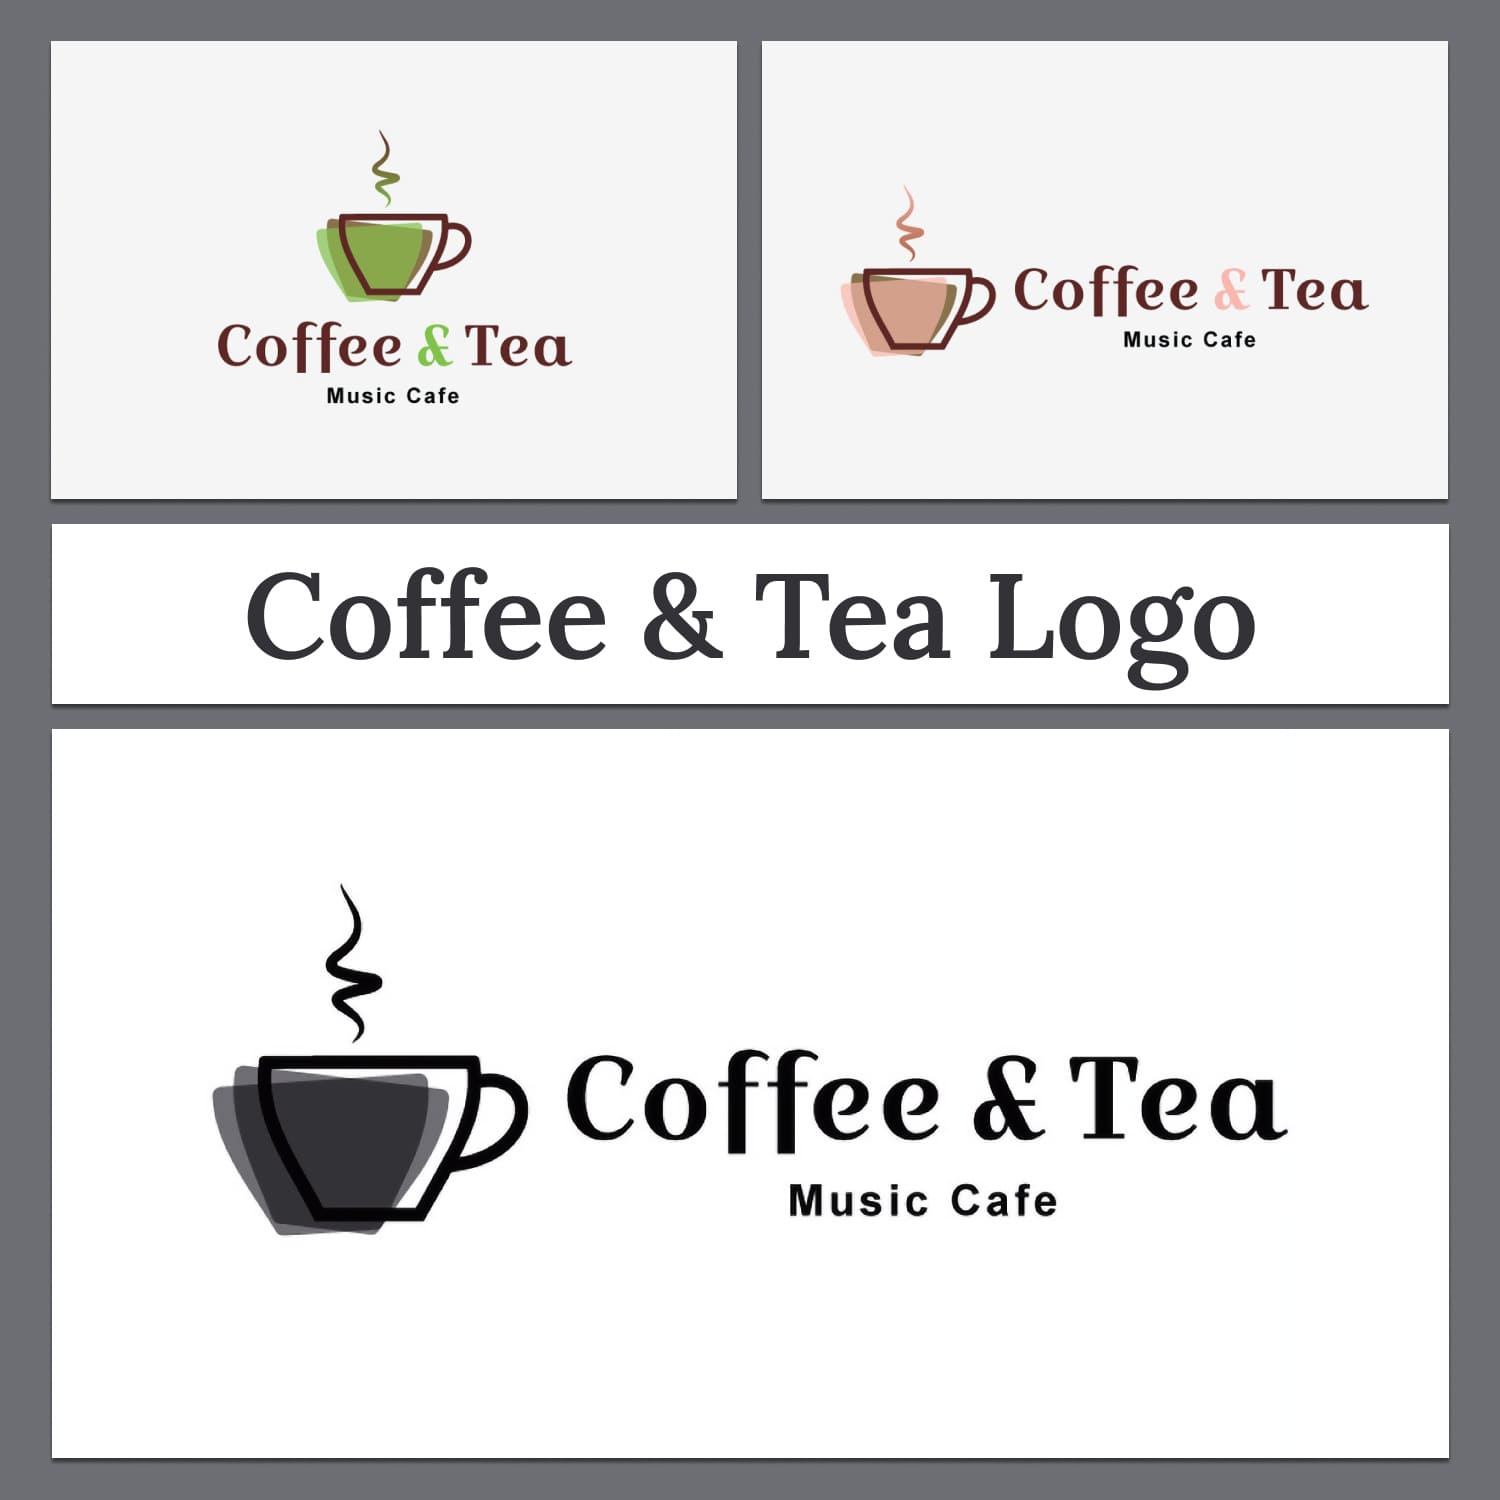 Coffee tea logo - main image preview.